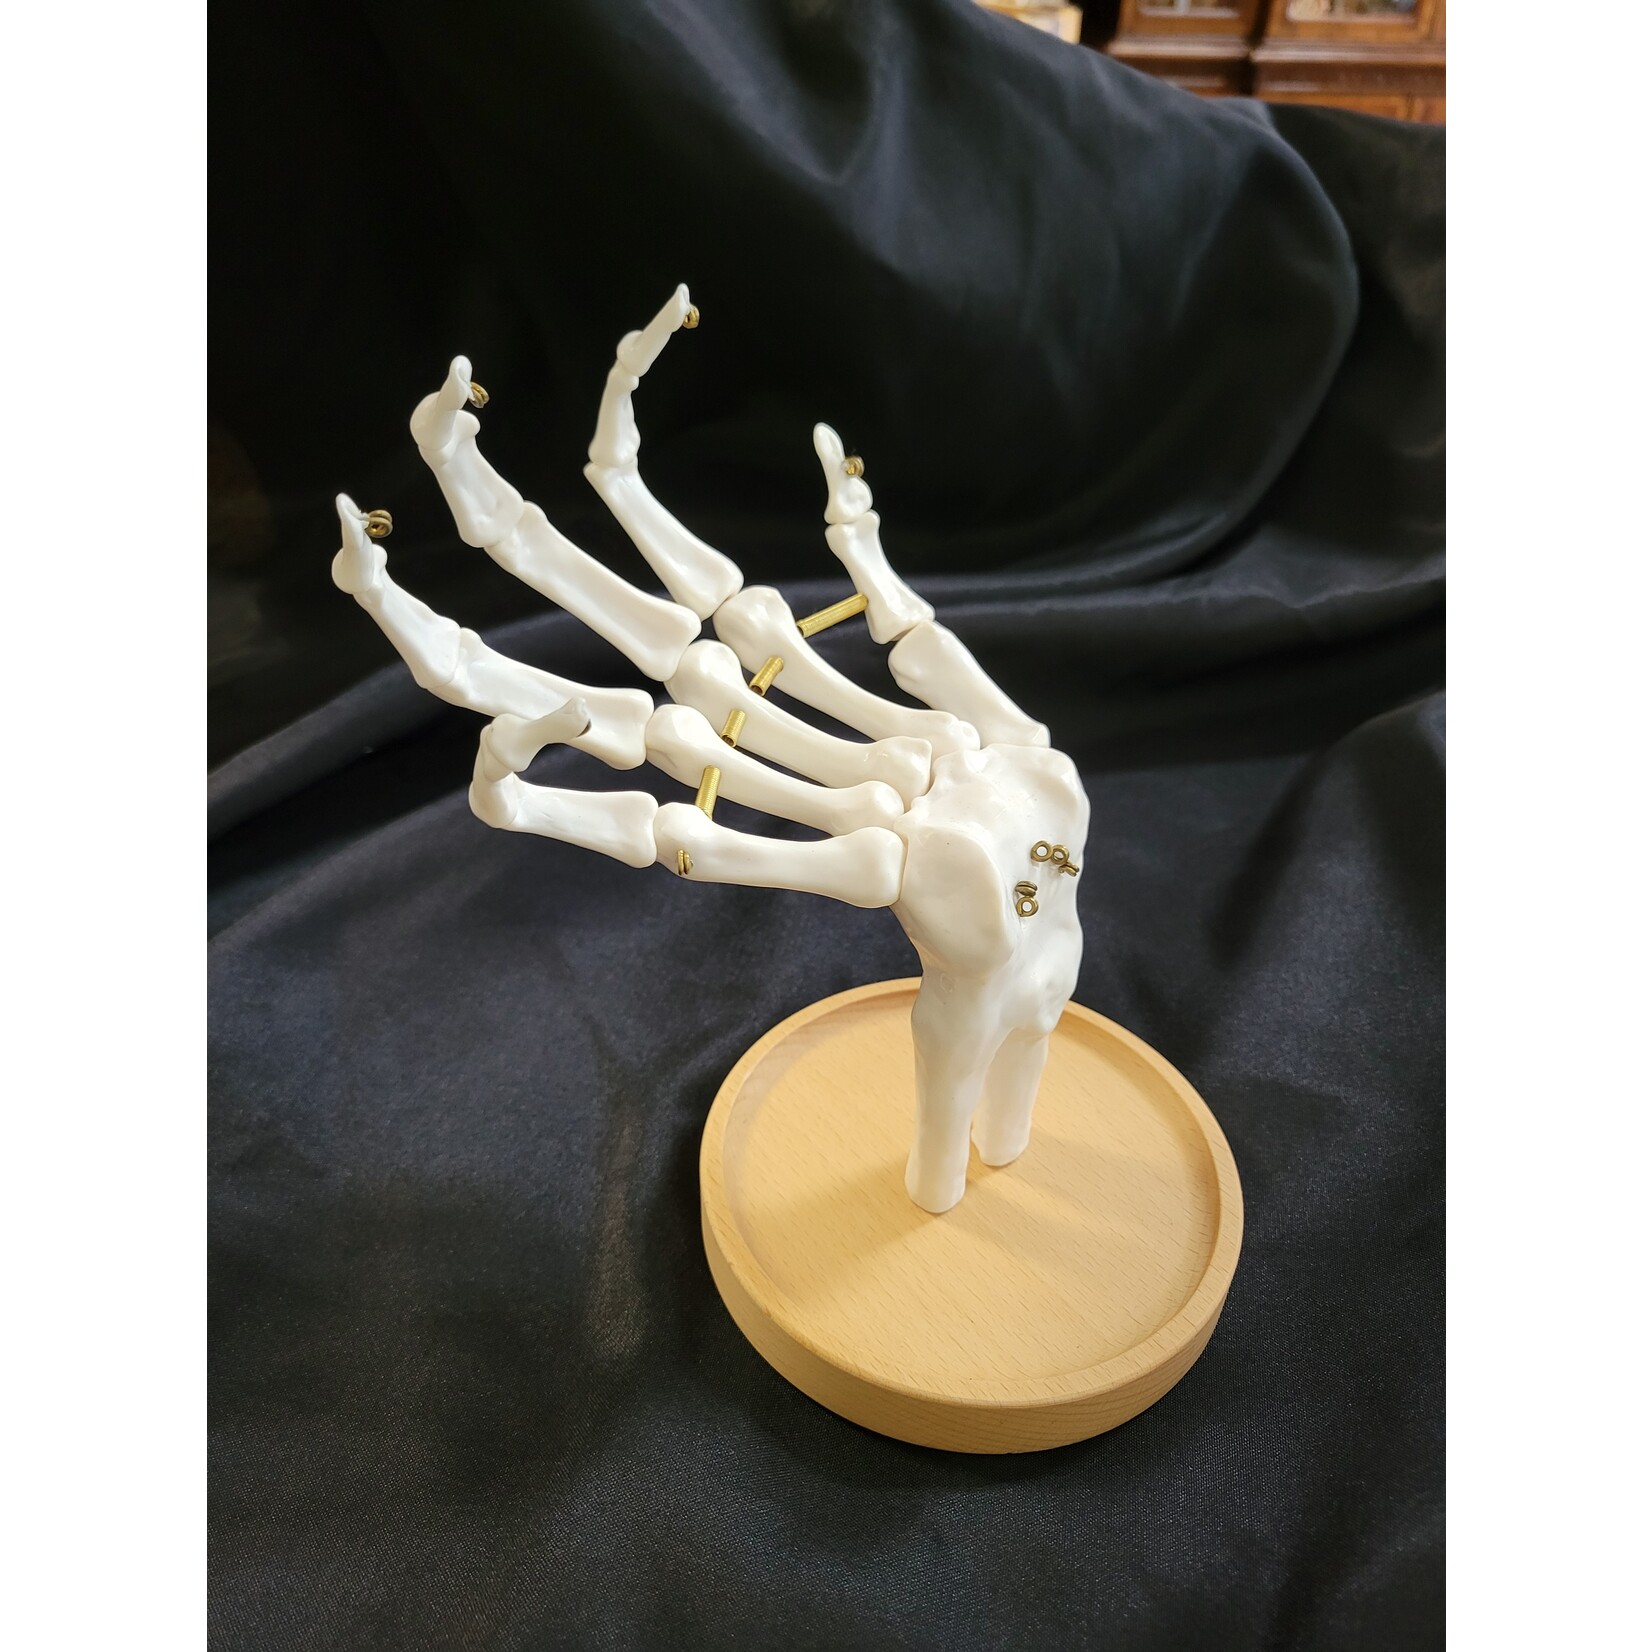 Suck UK Skeleton Hand Jewelry Tidy